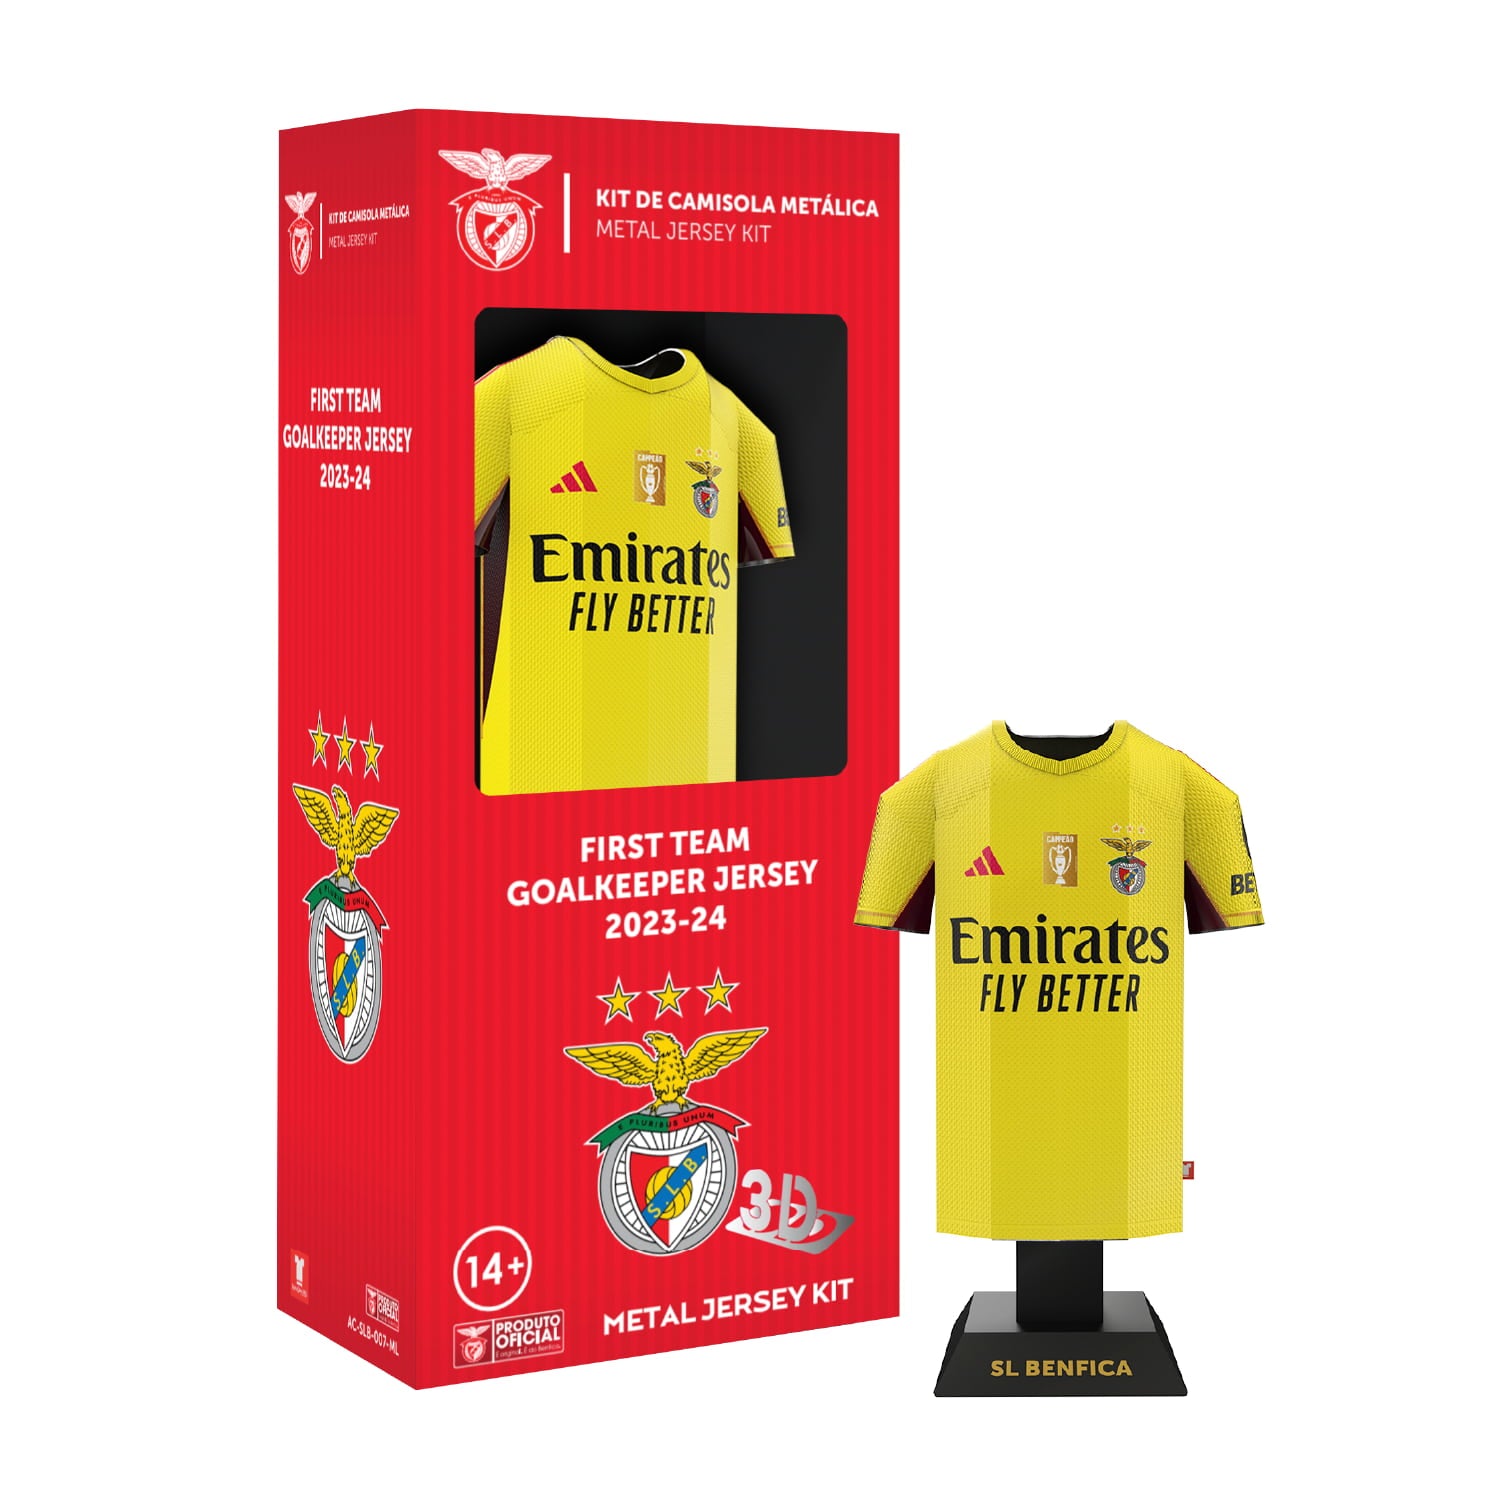 Benfica goalkeeper kit locker pack with packaging